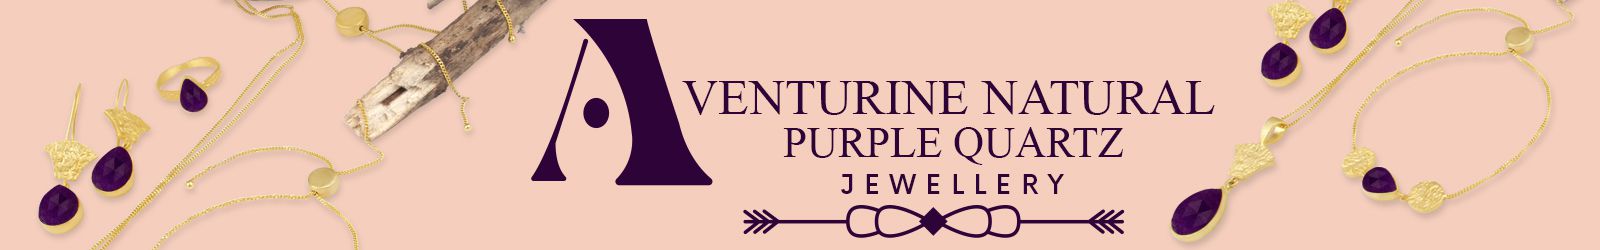 Silver Aventurine Natural Purple Quartz Jewelry Wholesale Supplier